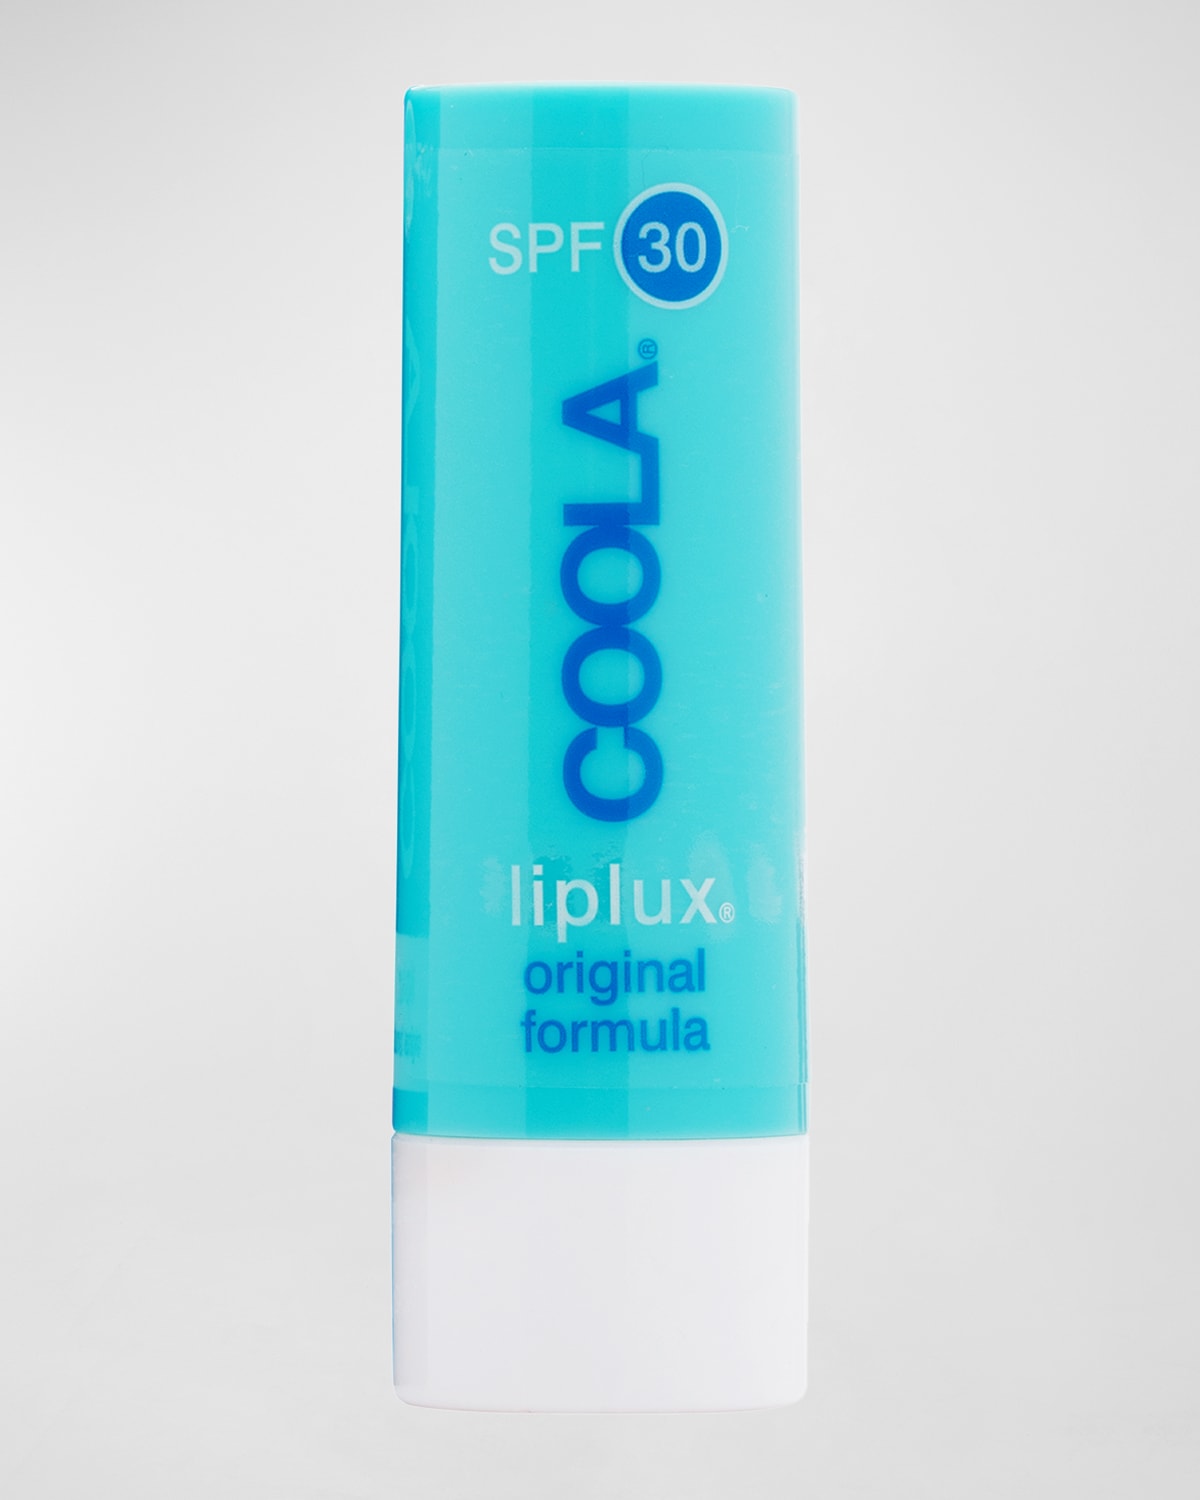 Classic Liplux SPF 30 Original Sunscreen, 0.15 oz.